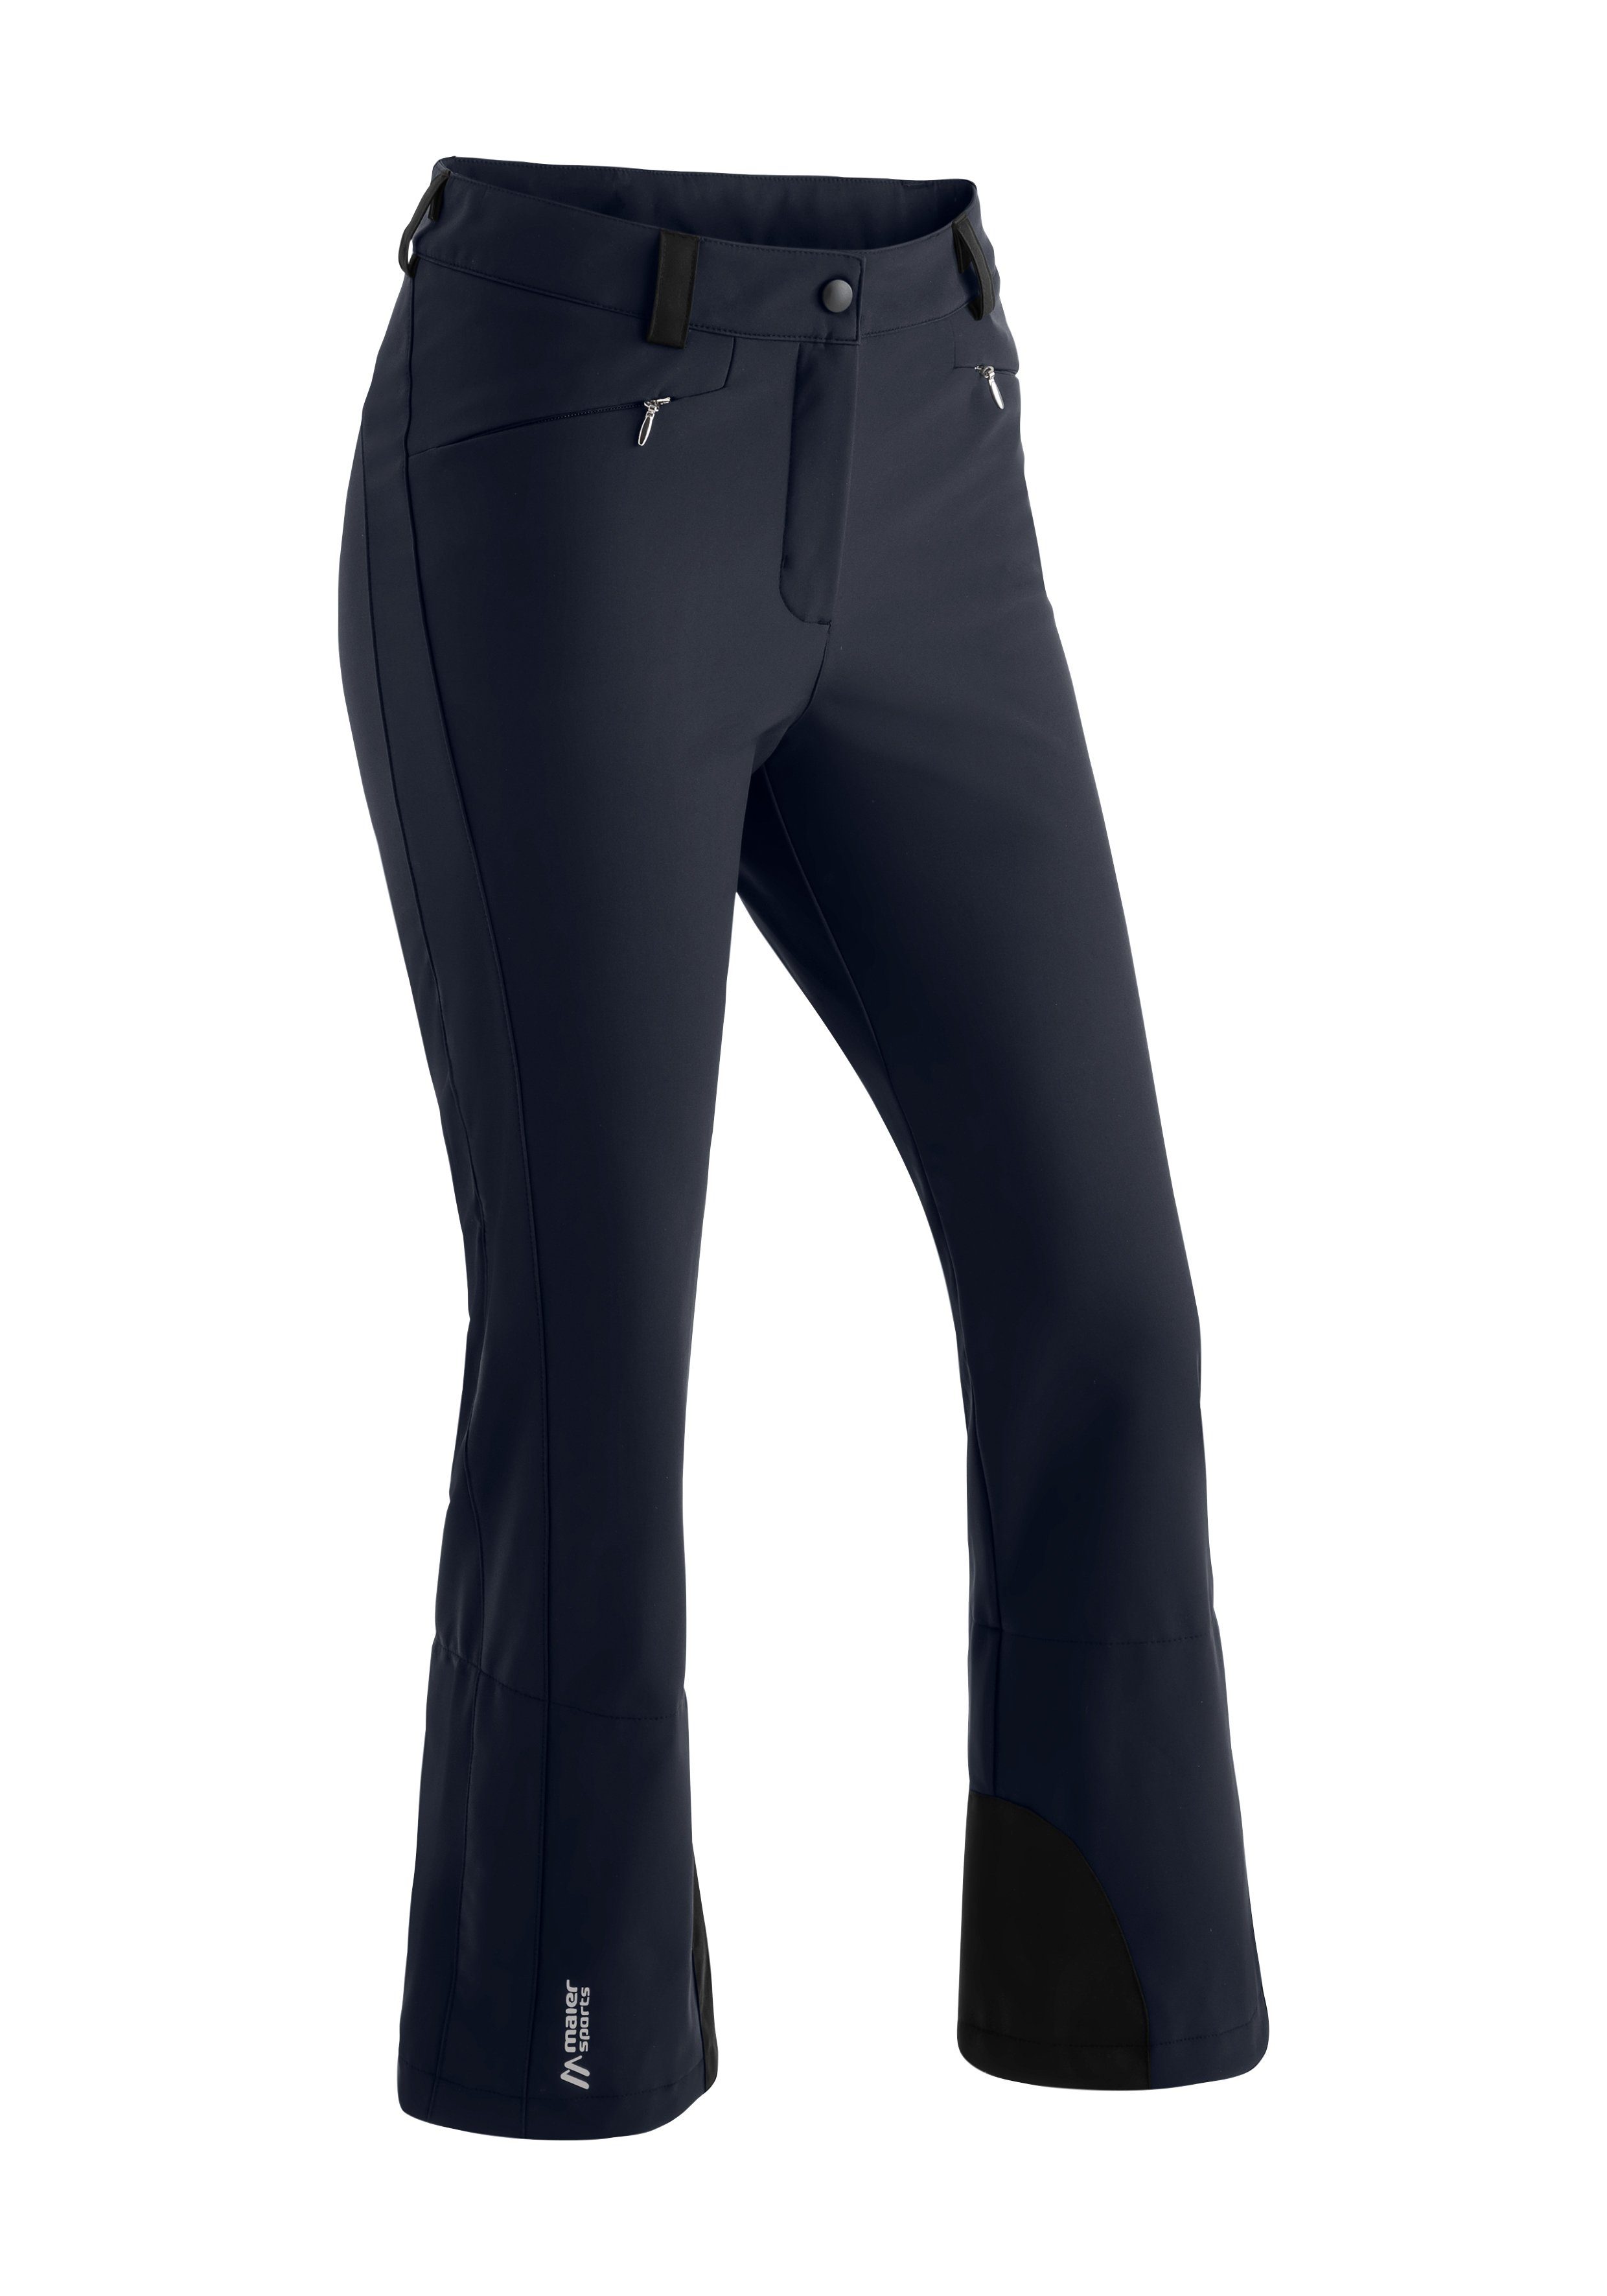 Maier Sports femininer, geschnittene in Eng Softshellhose Silhouette sportlicher Skihose Mary dunkelblau